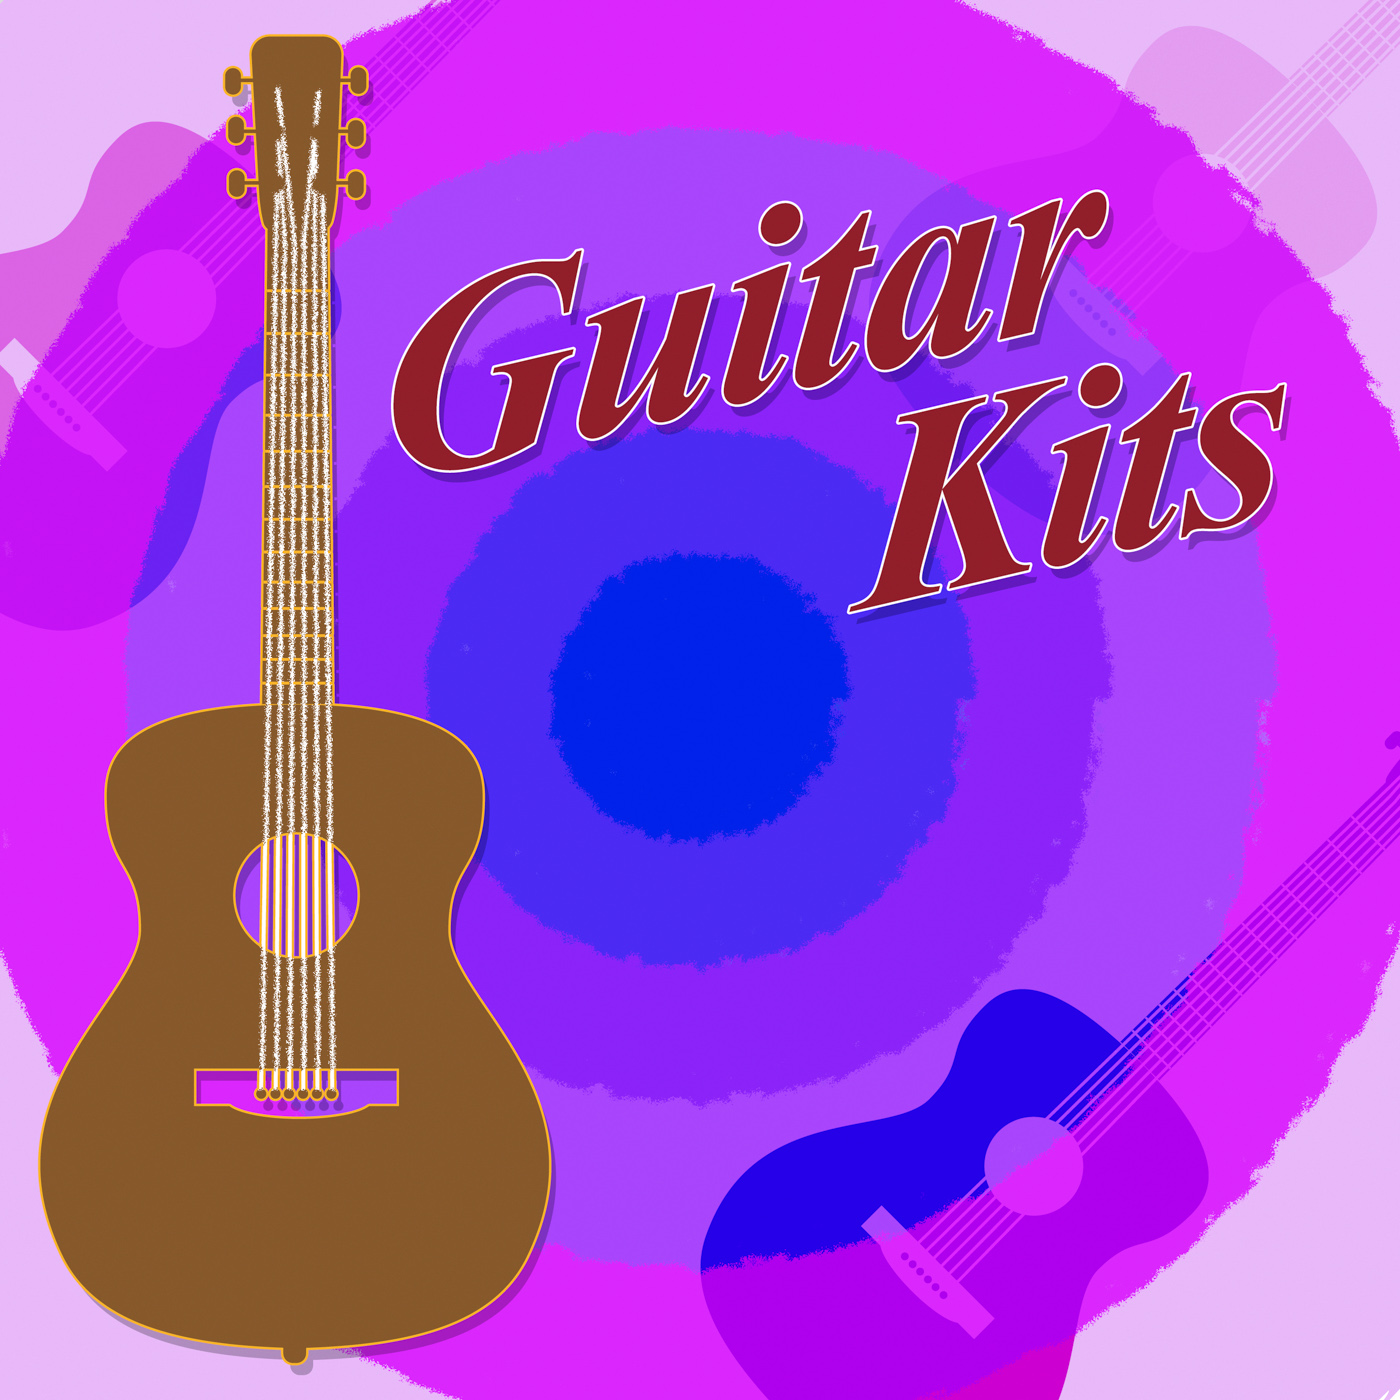 Guitar kits shows guitars guitarist and diy photo